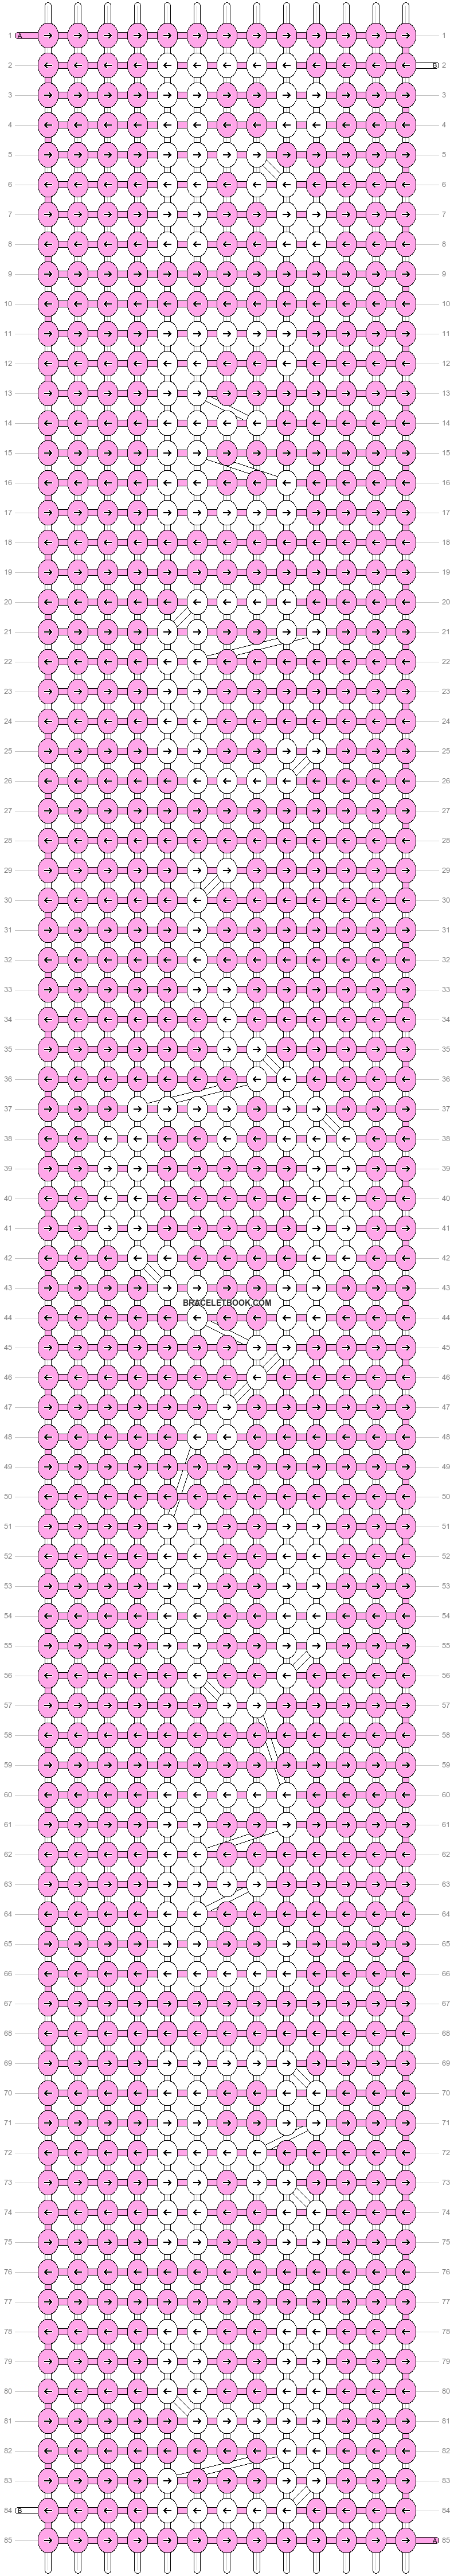 Alpha pattern #23585 variation #19552 pattern